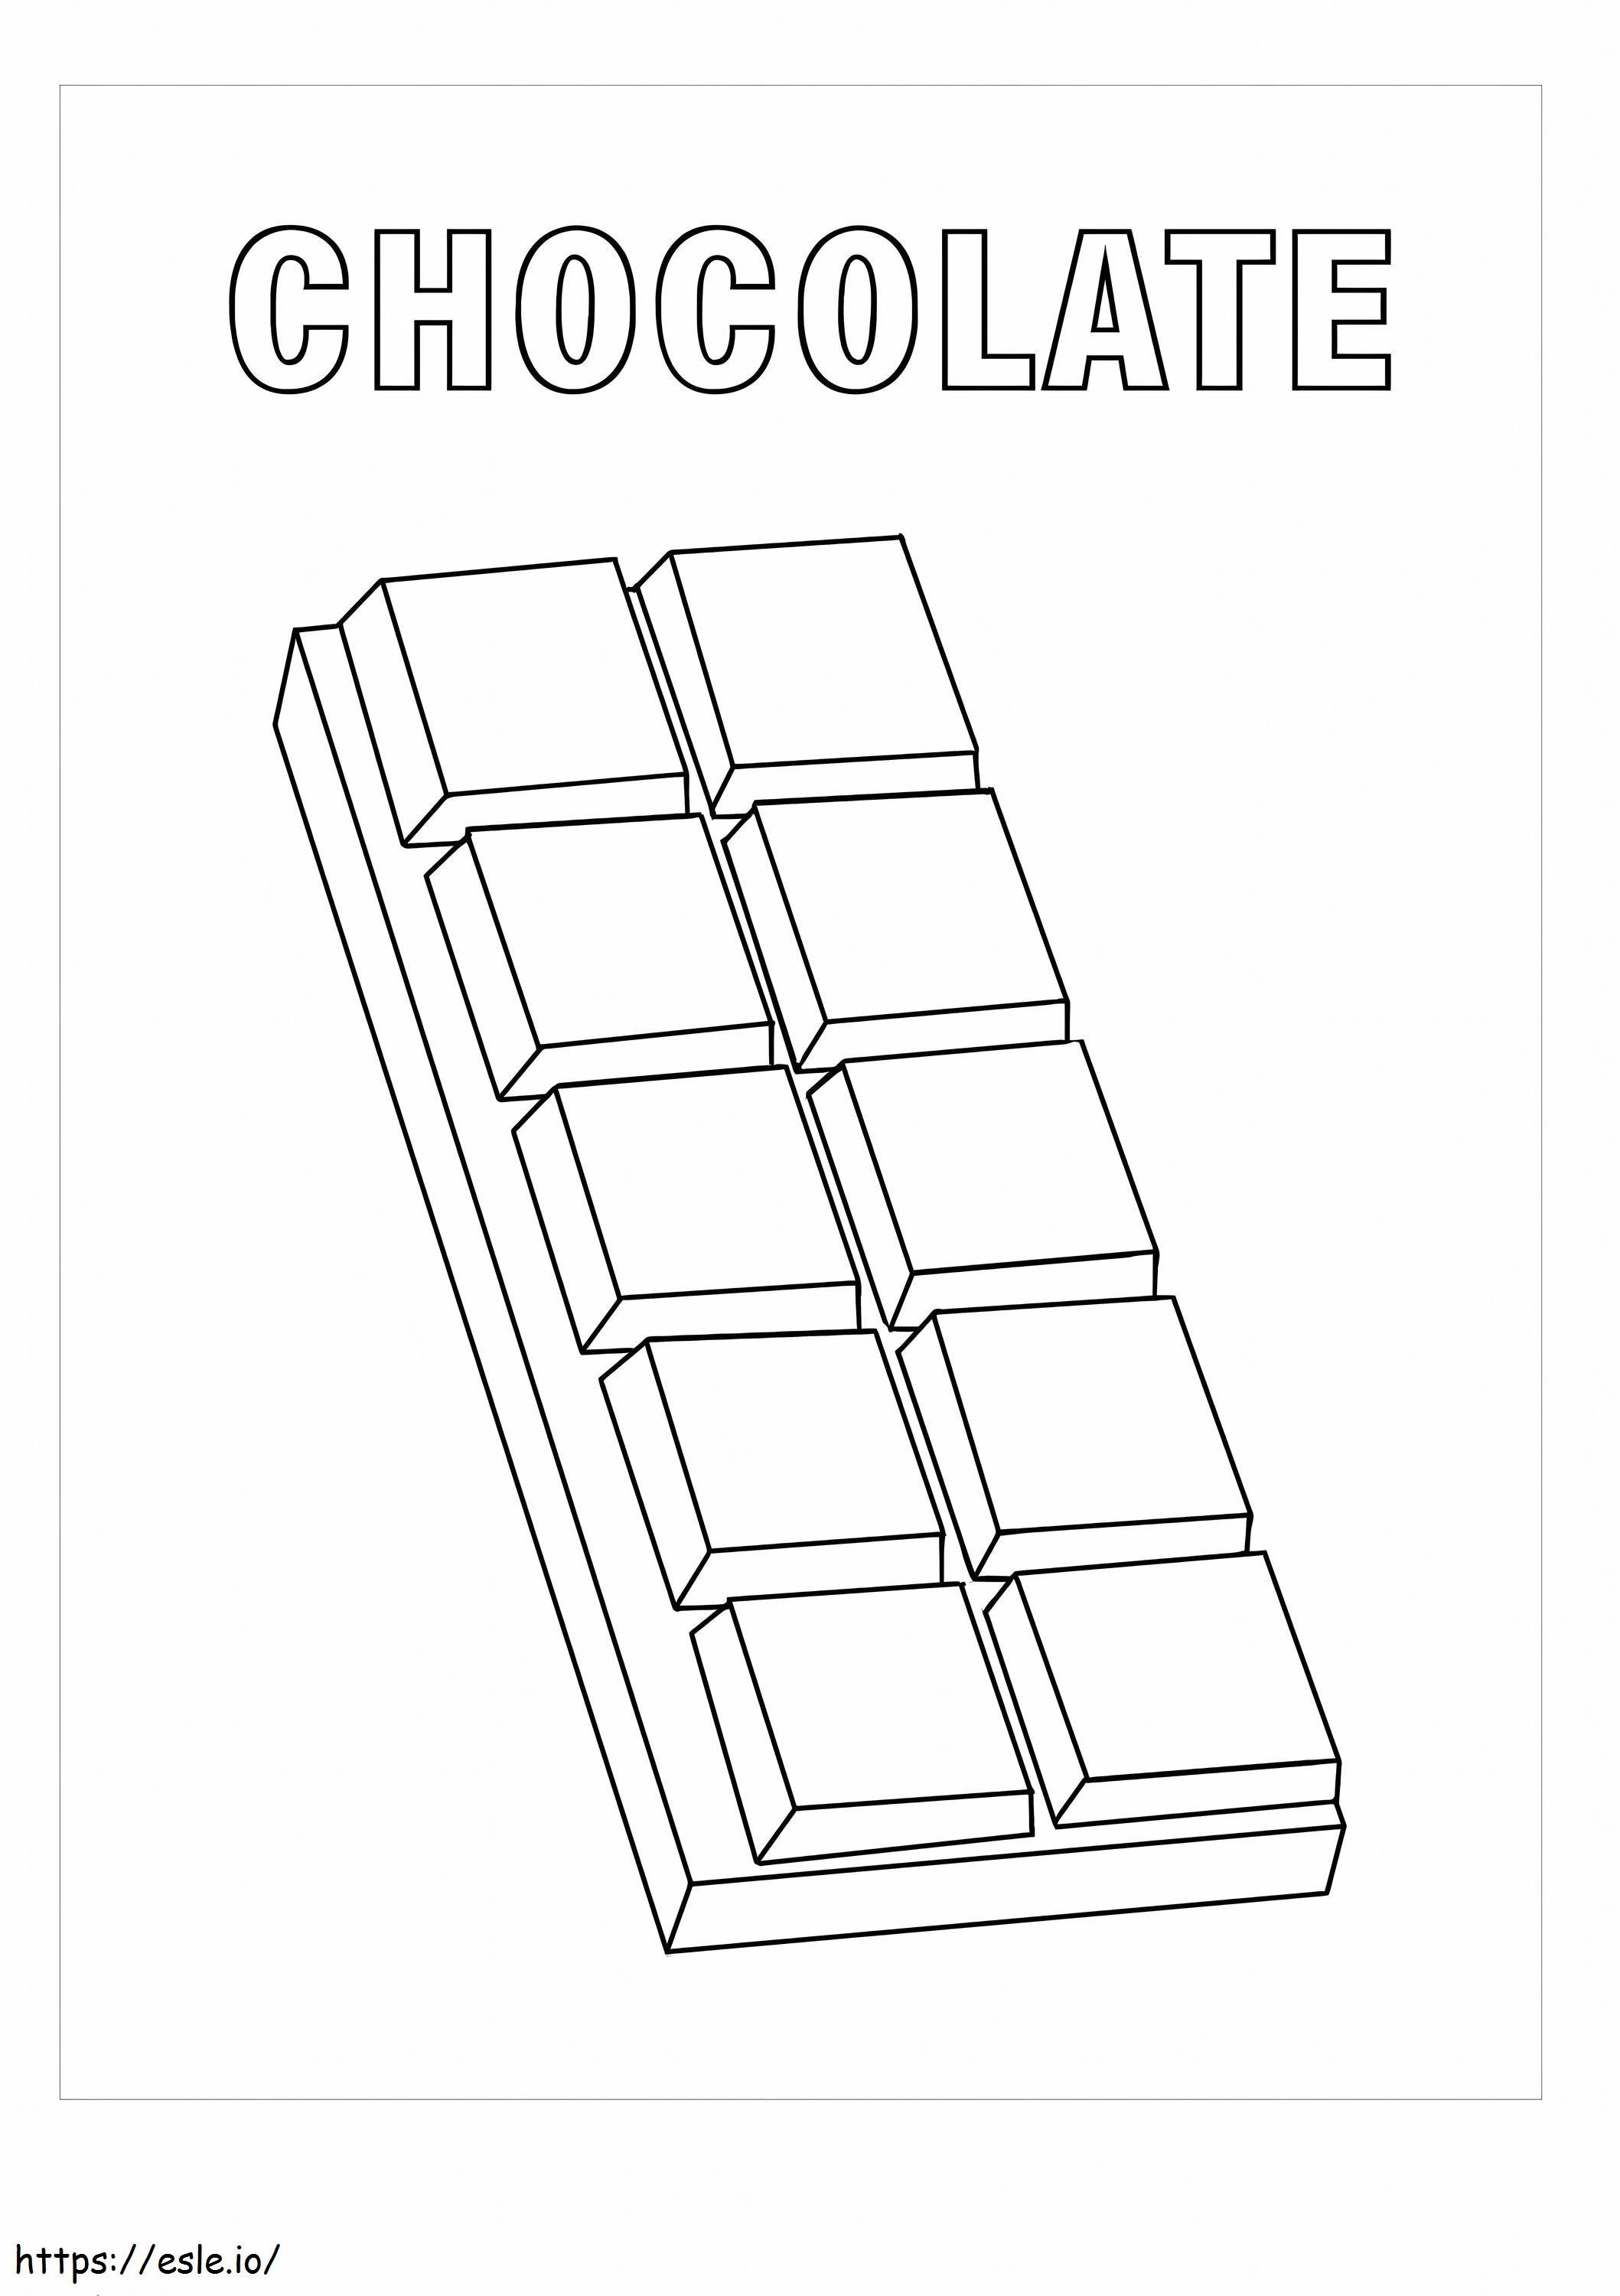 Big Chocolate Bar coloring page